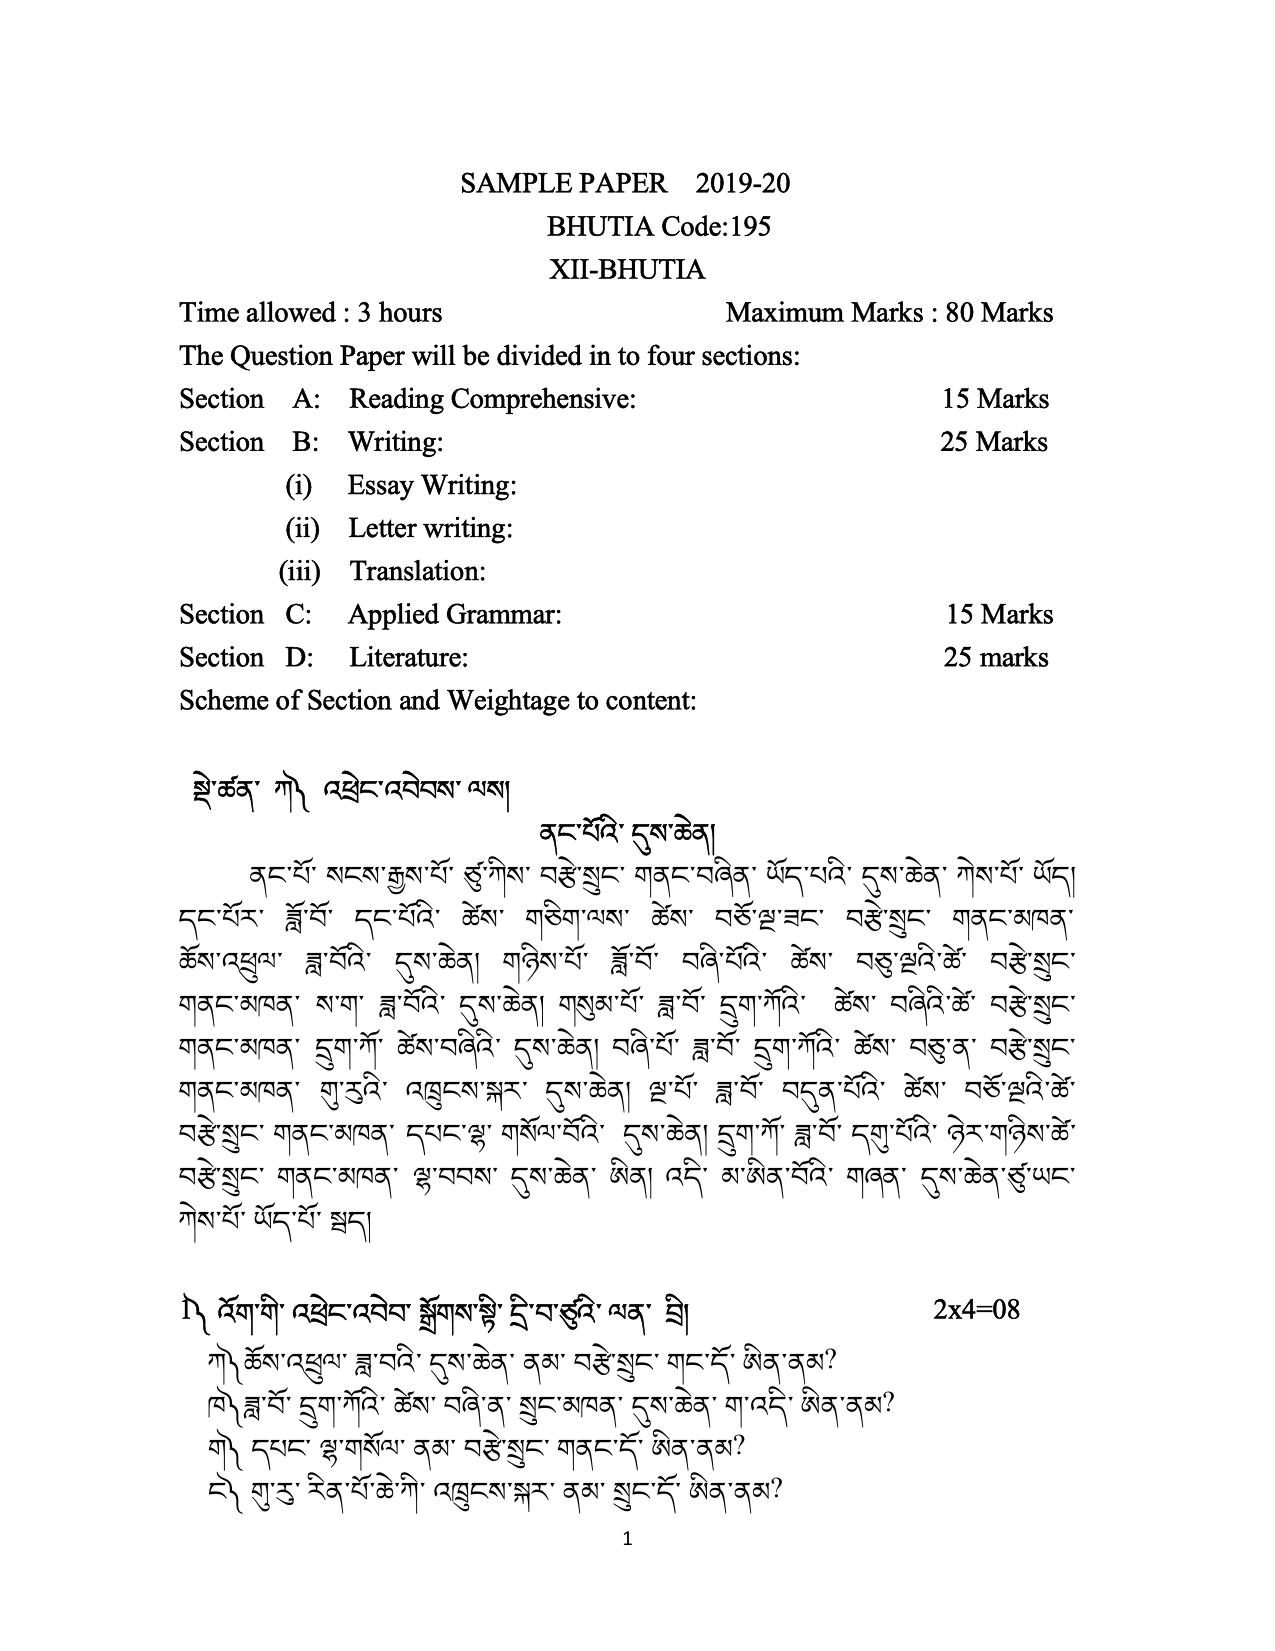 CBSE Class 12 Bhutia Skill Education-Sample Paper 2019-20 - Page 1